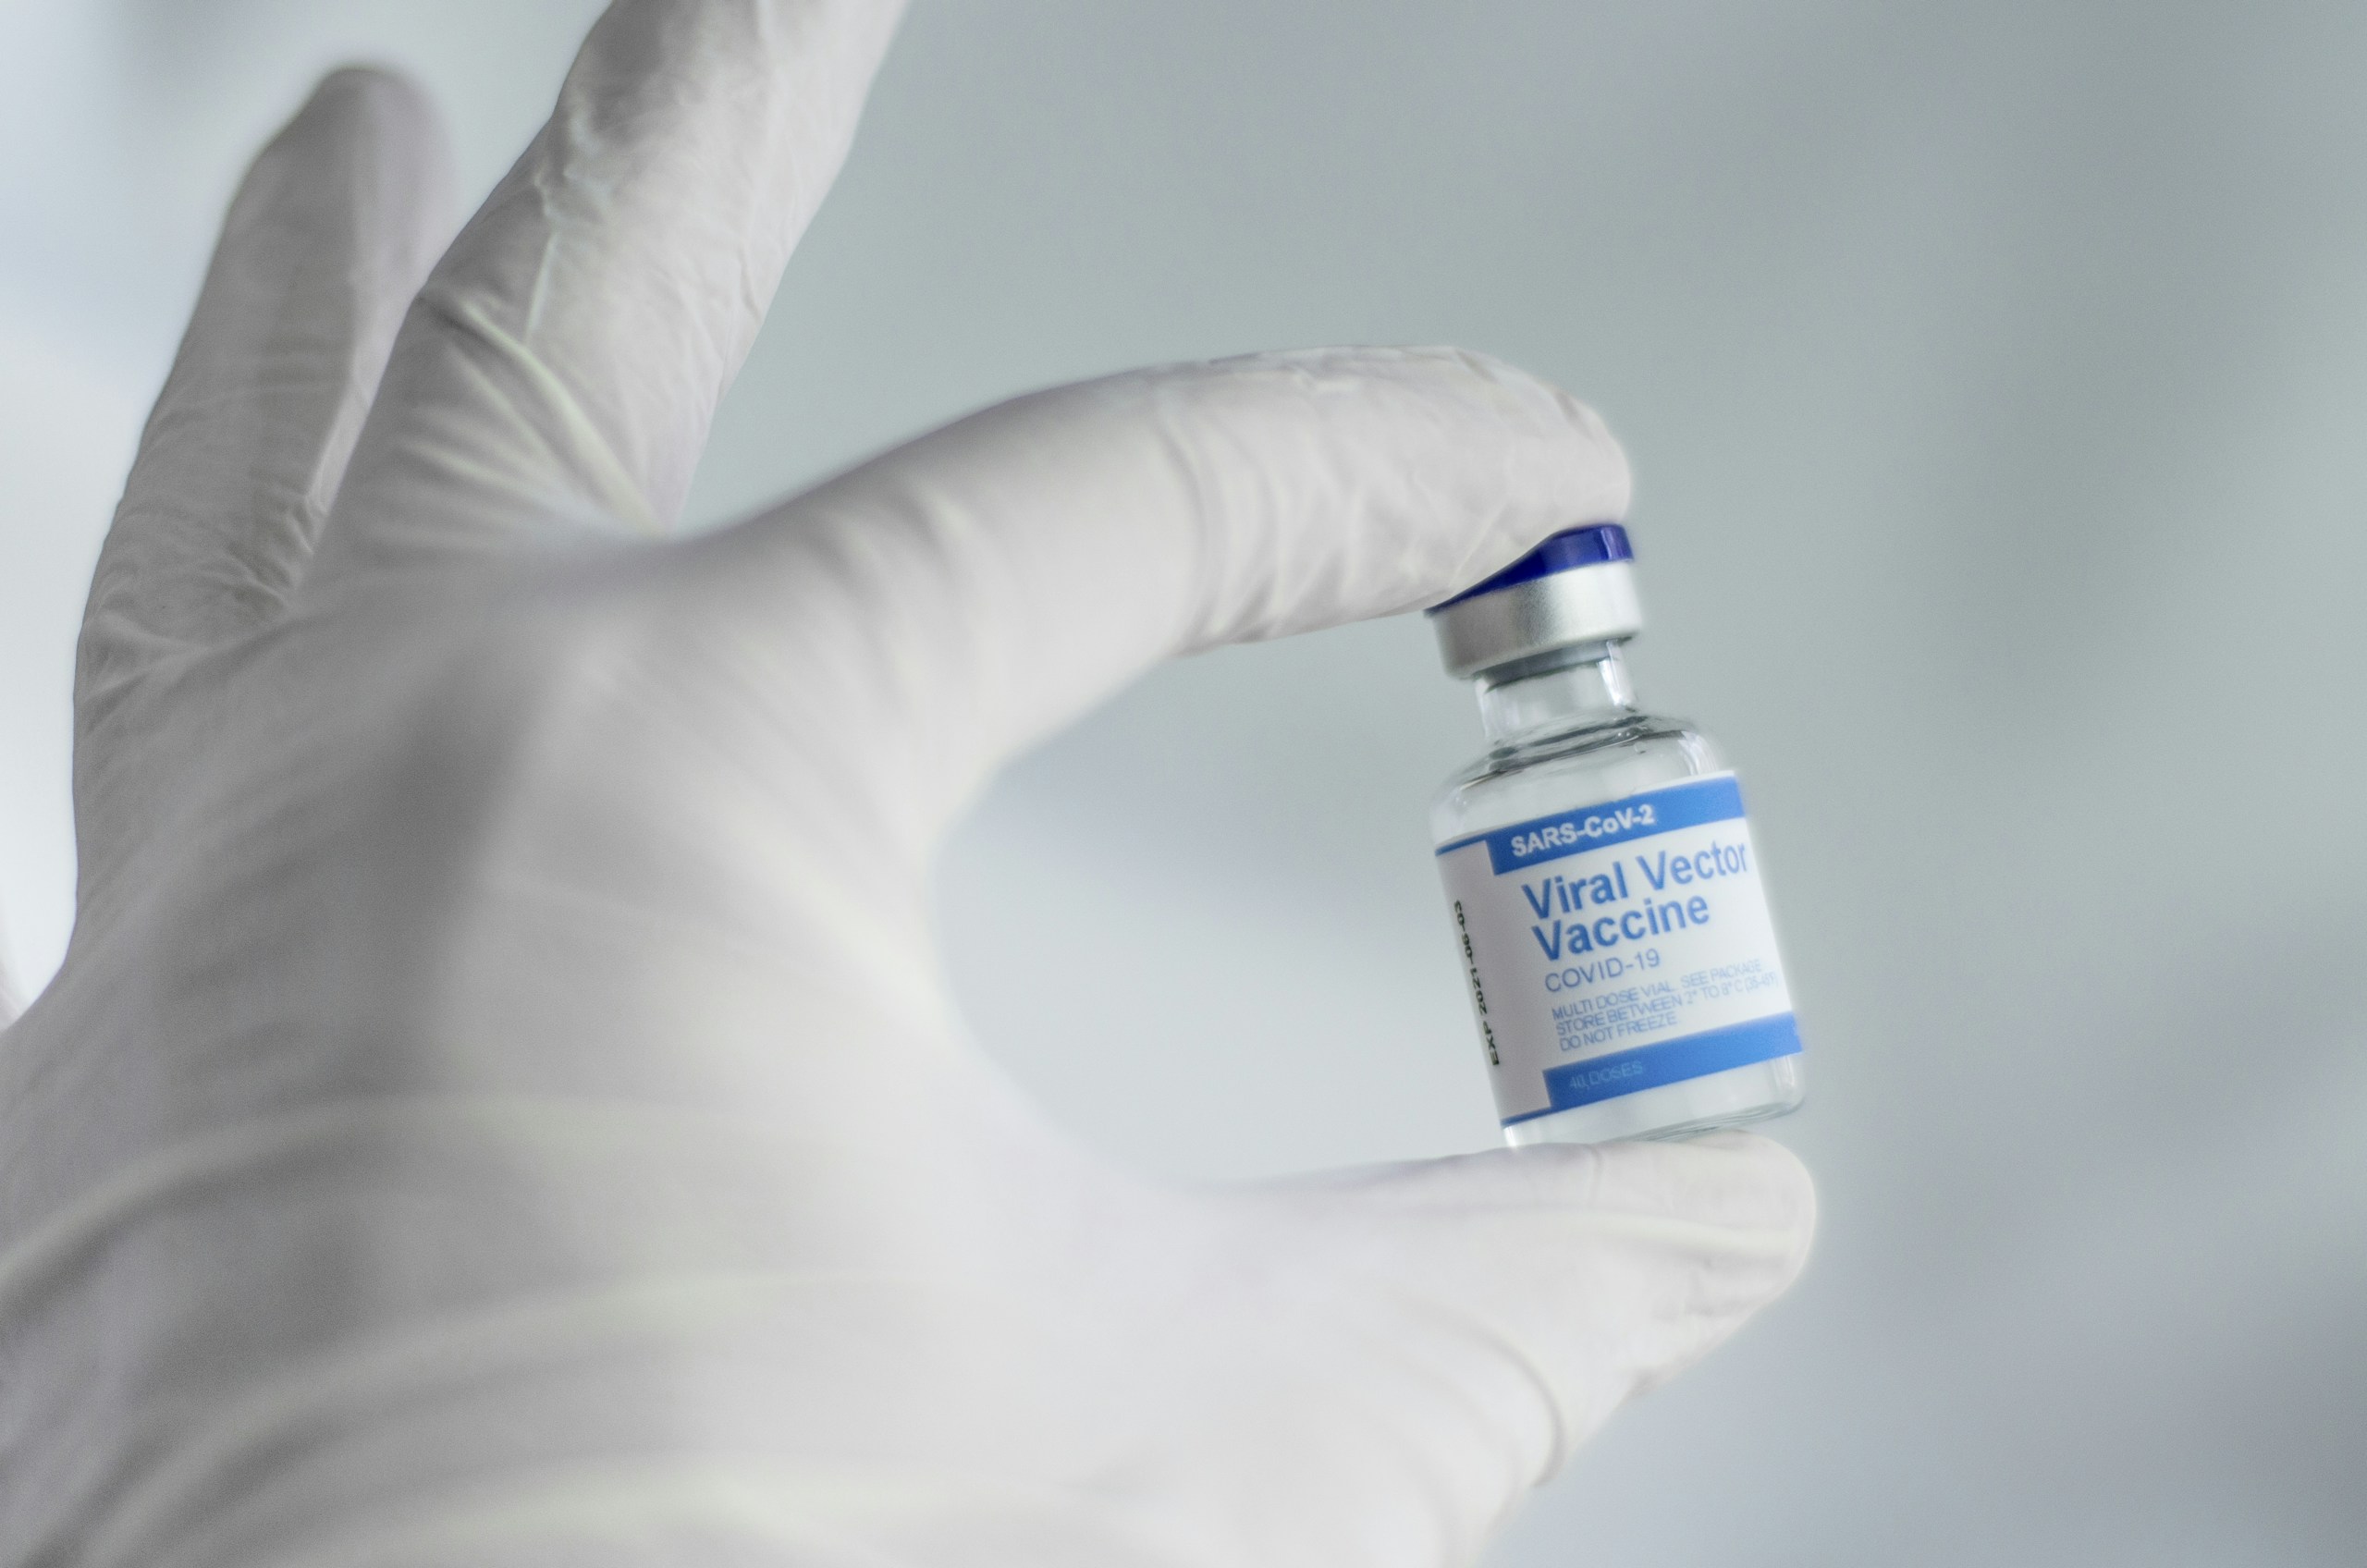 vacunas del coronavirus, person holding white and blue labeled bottle AstraZeneca